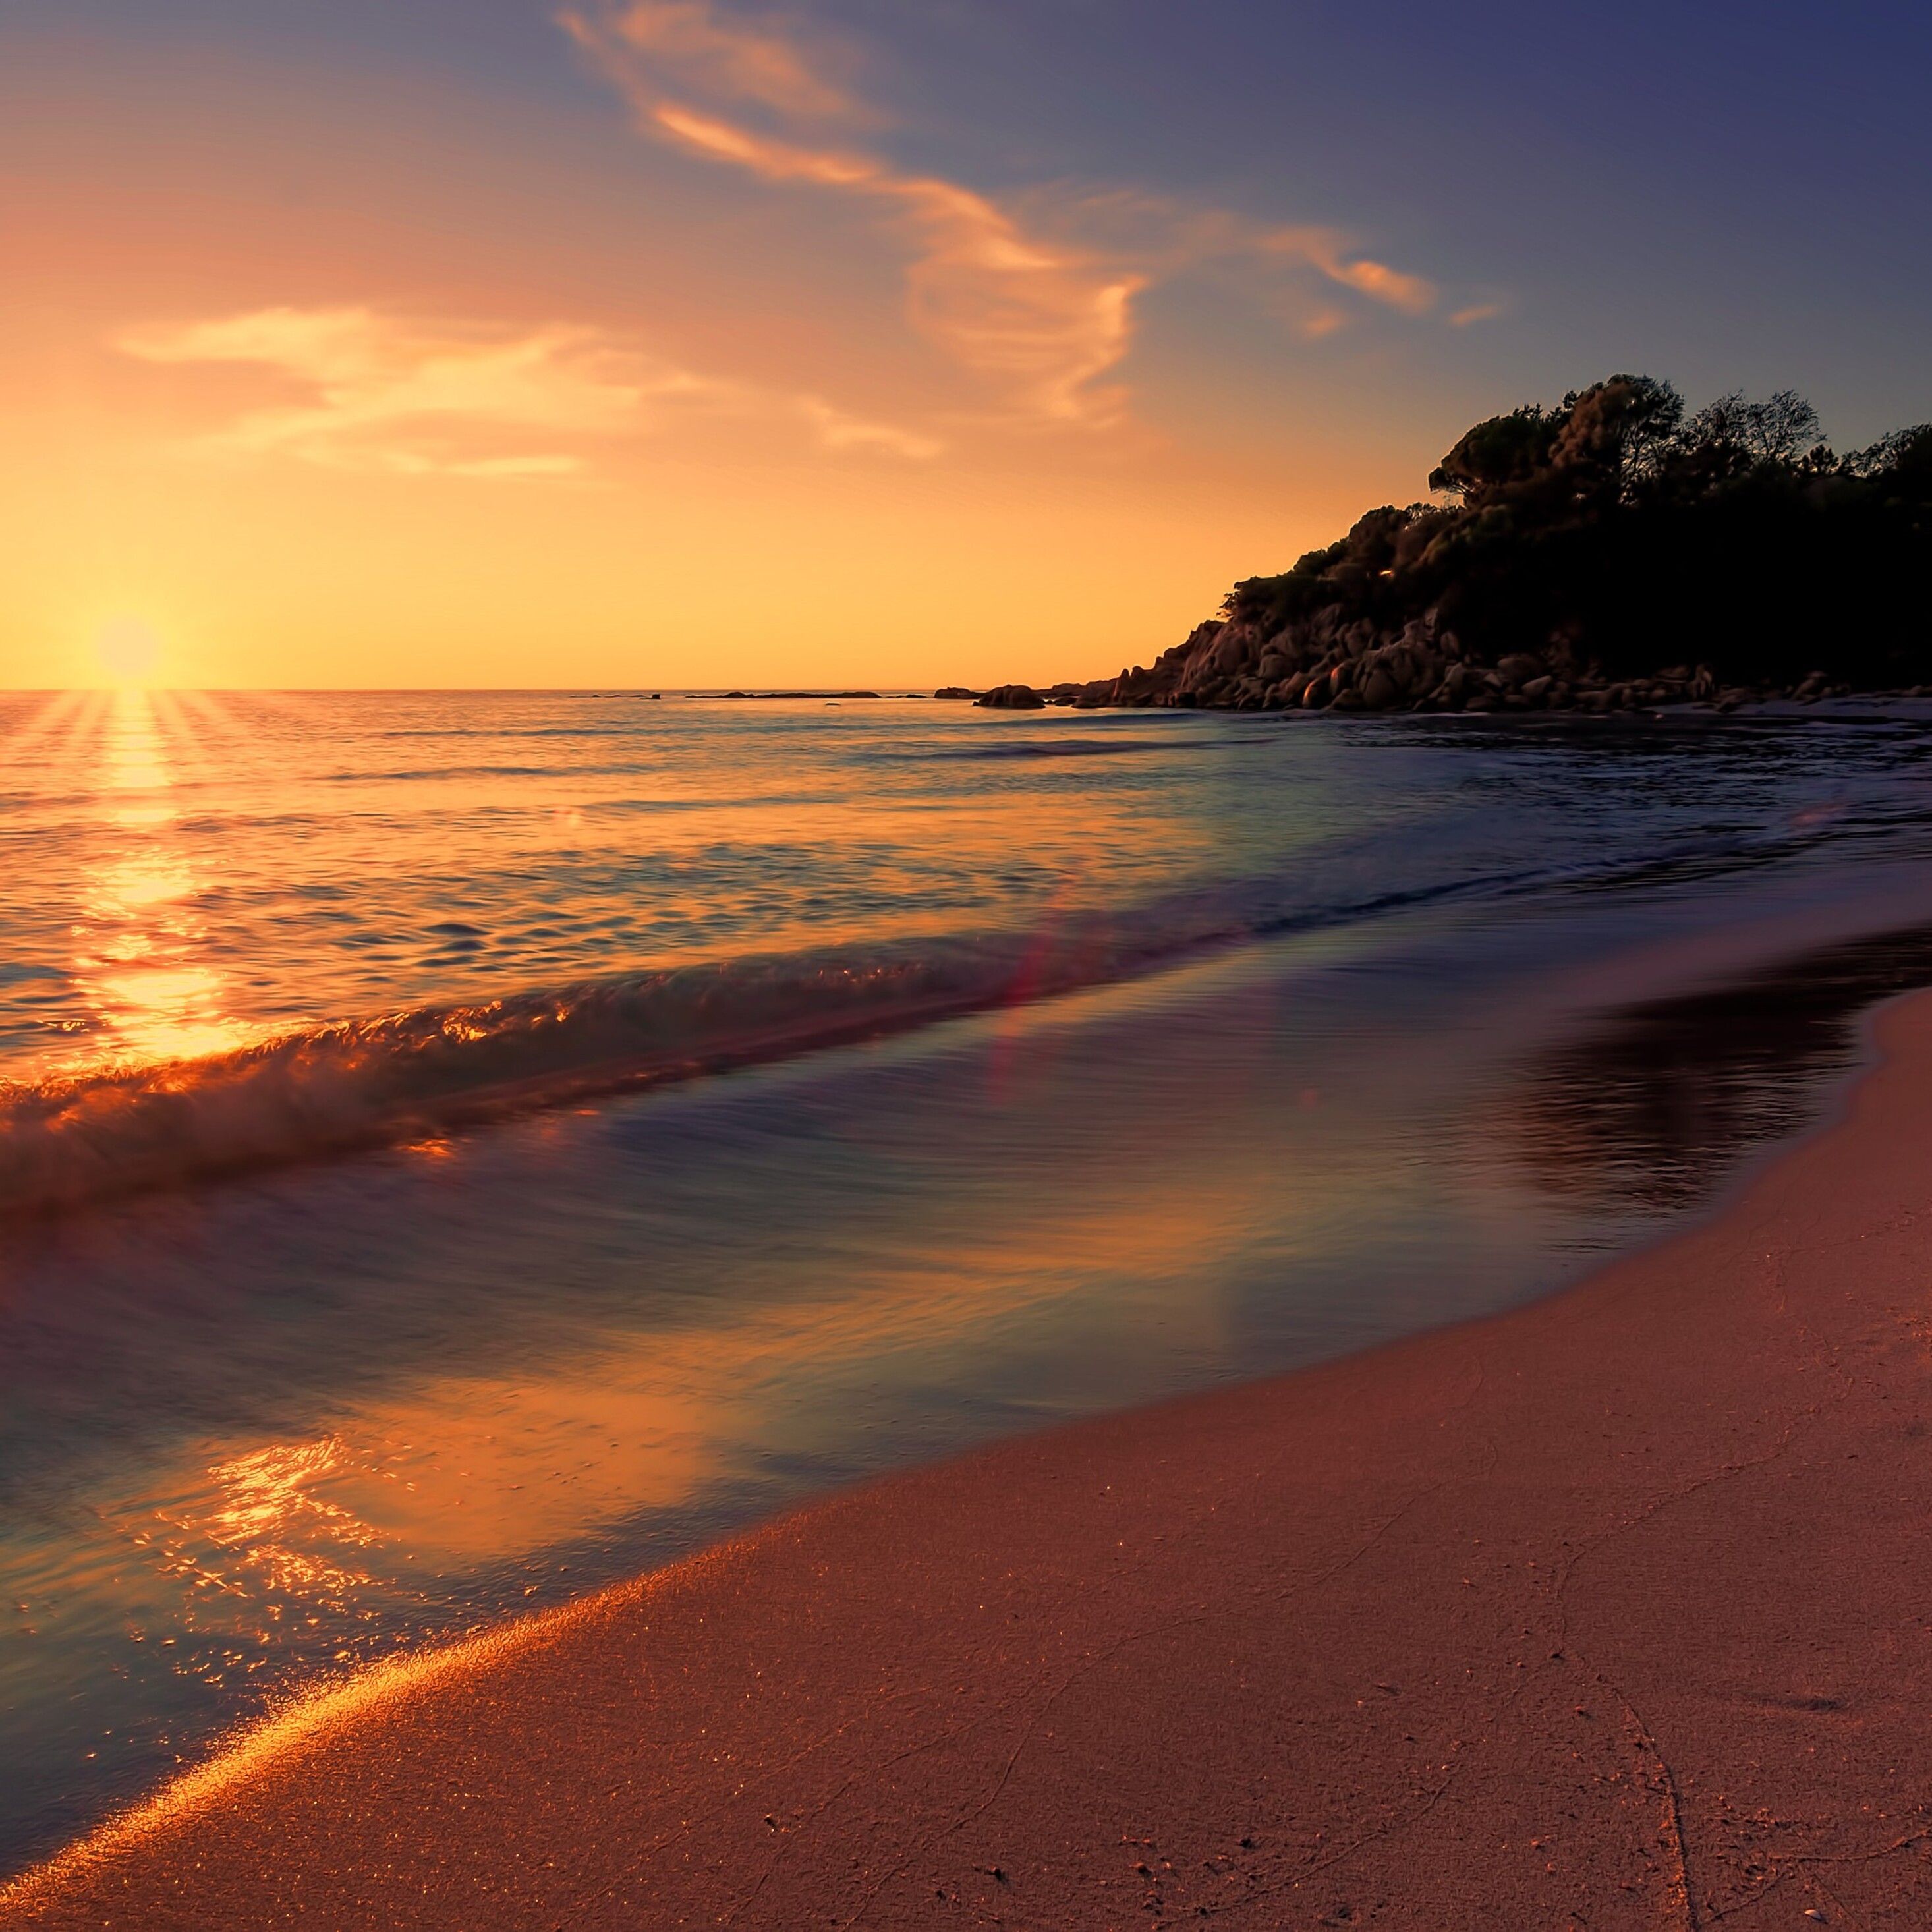 Sea Sunset Beach Sunlight Long Exposure 4k iPad Pro Retina Display HD 4k Wallpaper, Image, Background, Photo and Picture